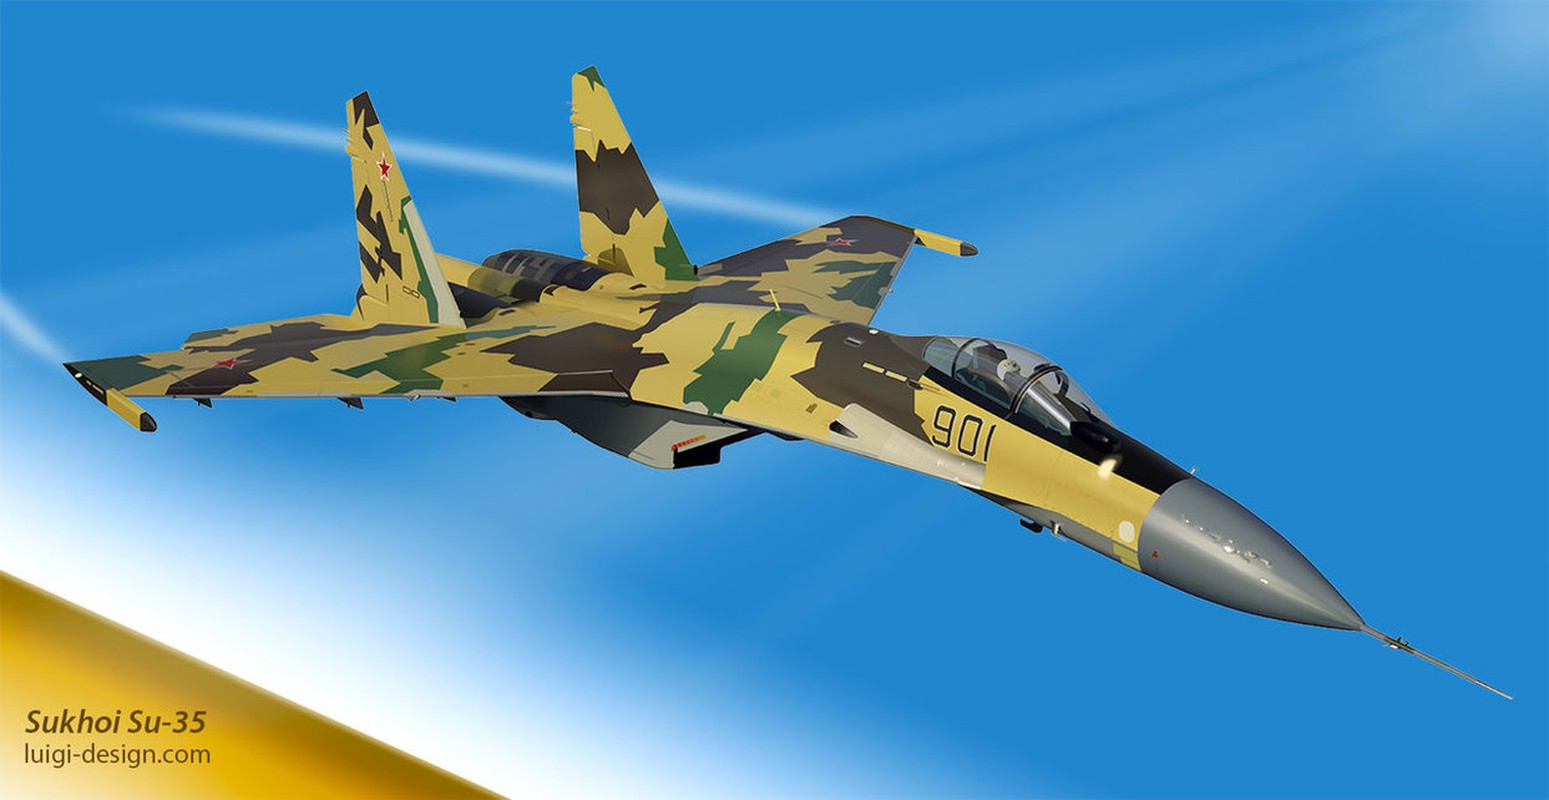 Bao My “cay dang” thua nhan “Su-35 la vua cua bau troi”